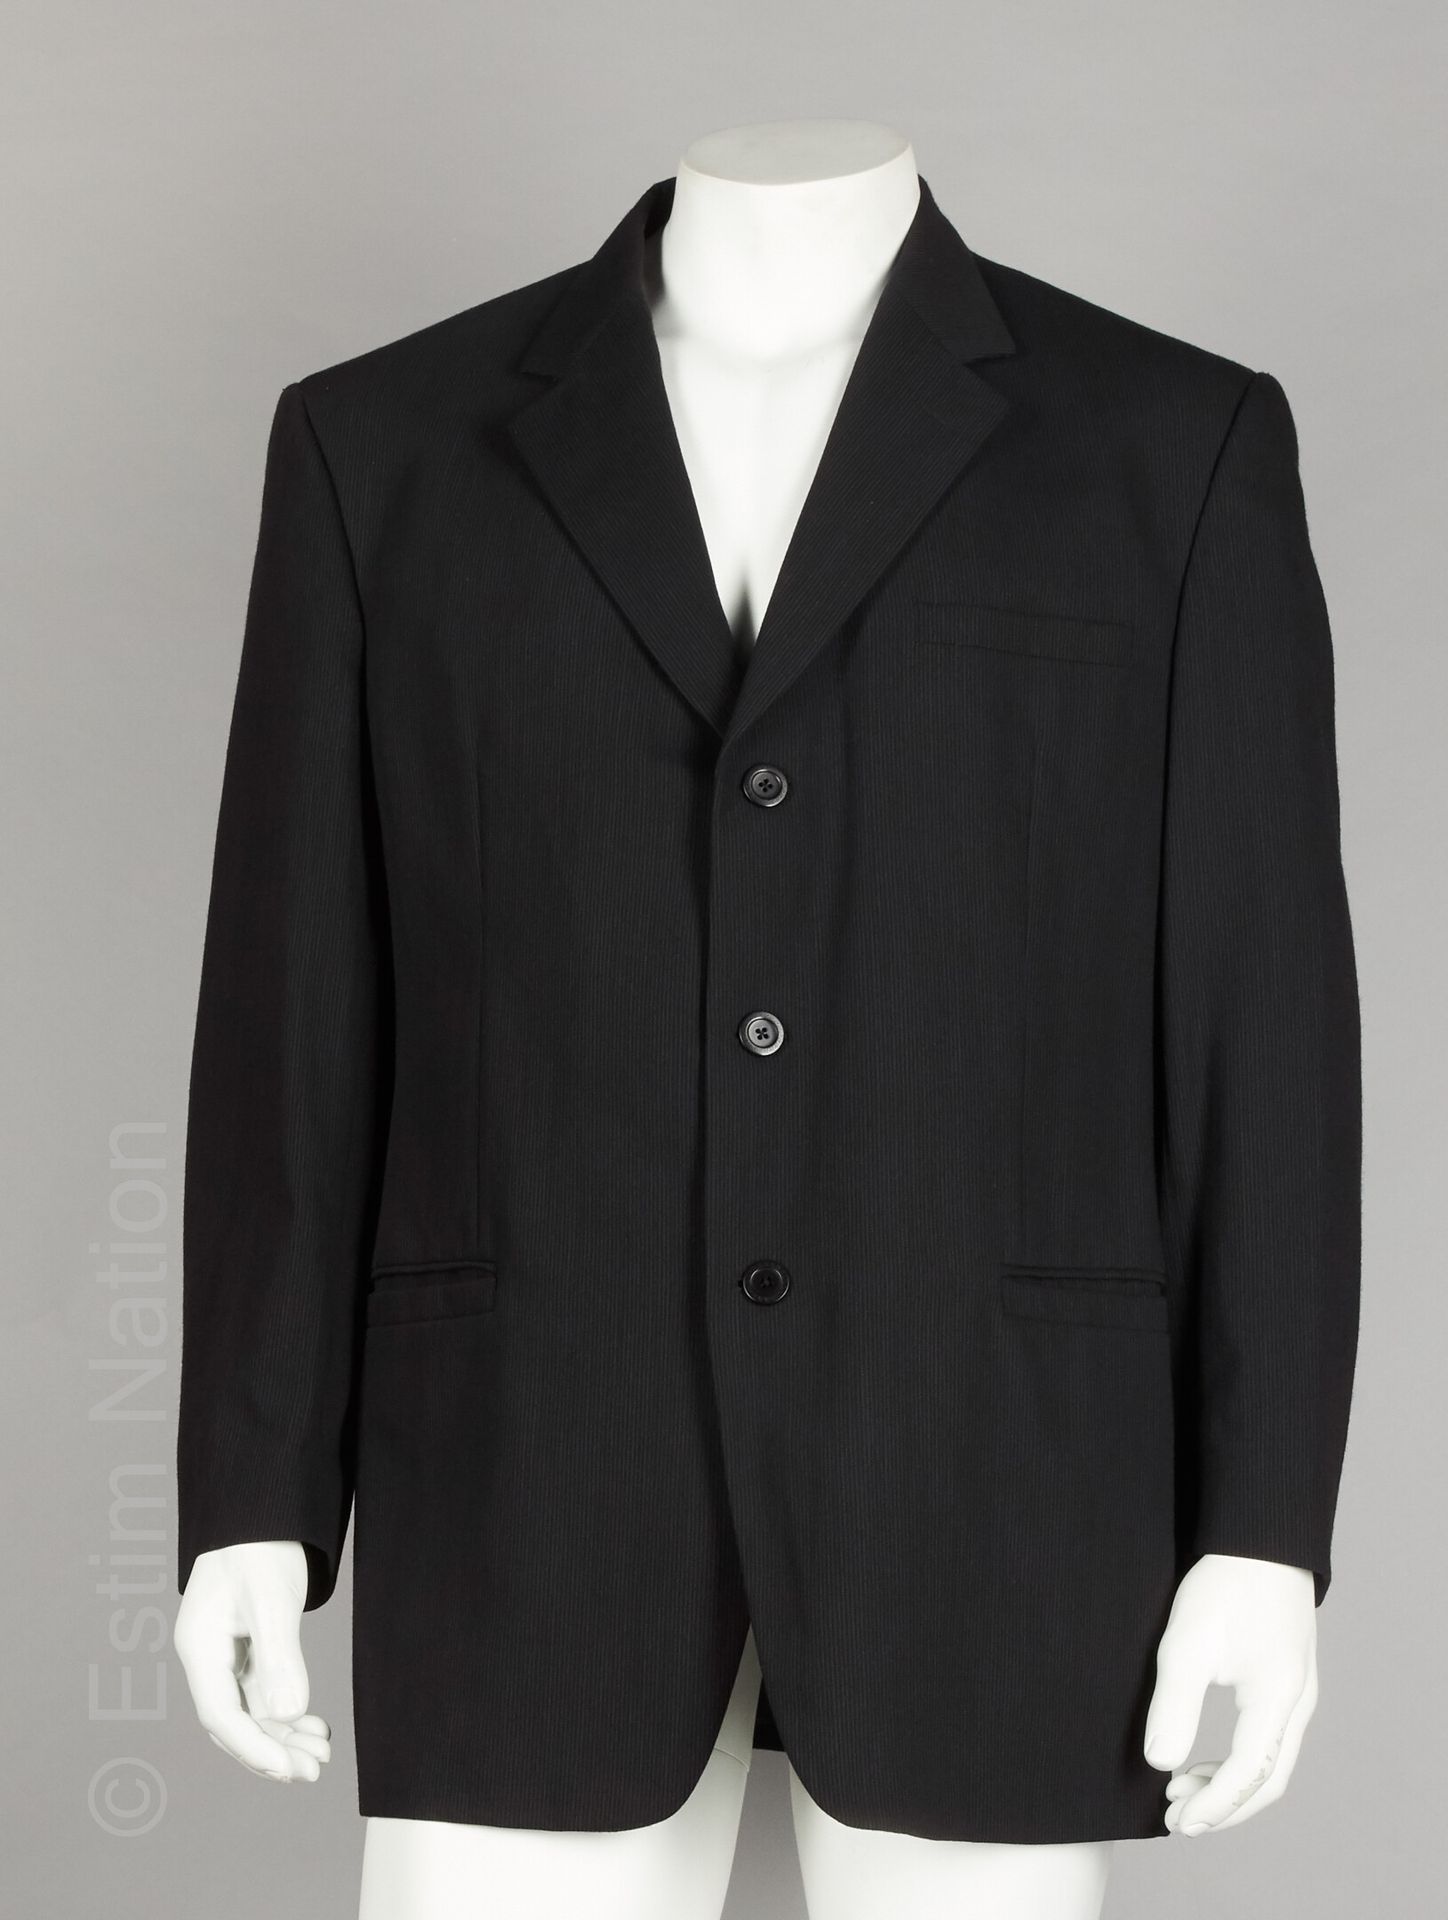 VERSACE CLASSIC V2 TRAJE de lana negra con rayas finas, chaqueta con tres bolsil&hellip;